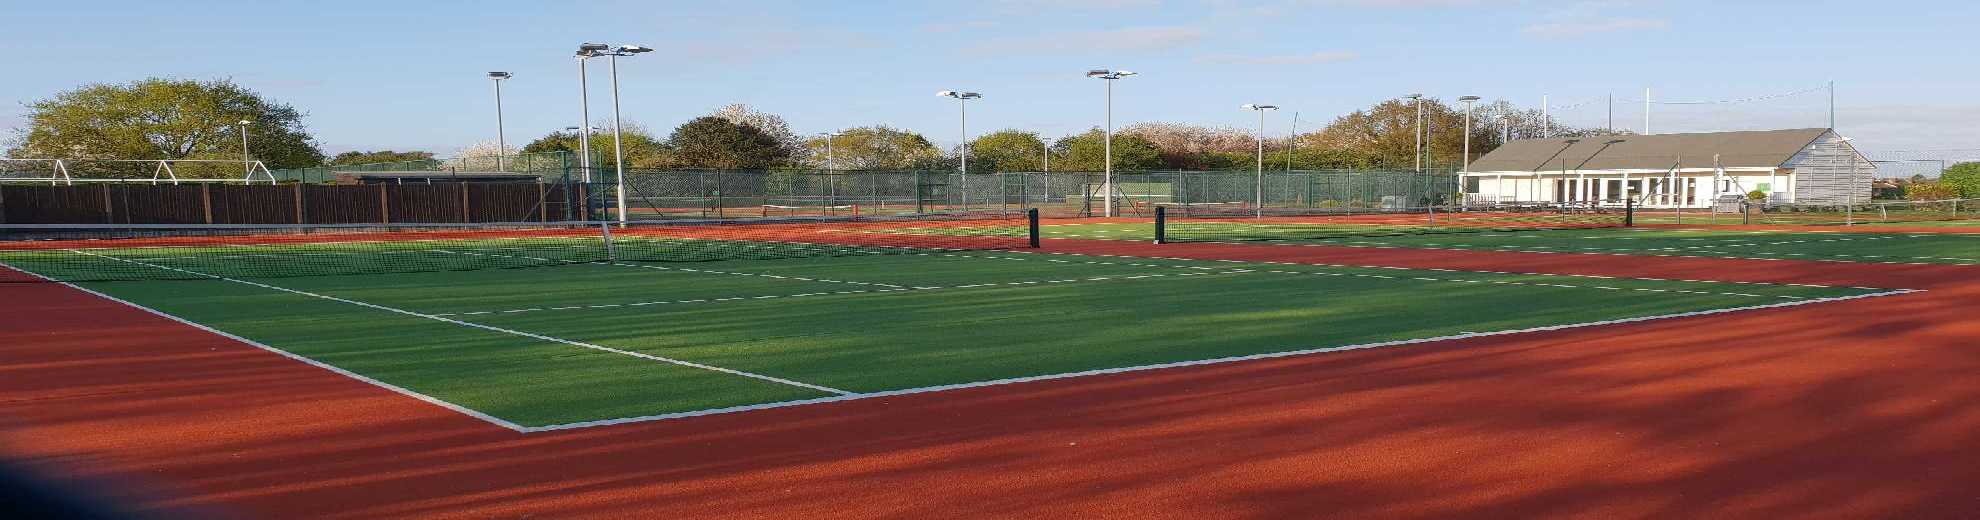 Croxley Tennis Club - Safeguarding